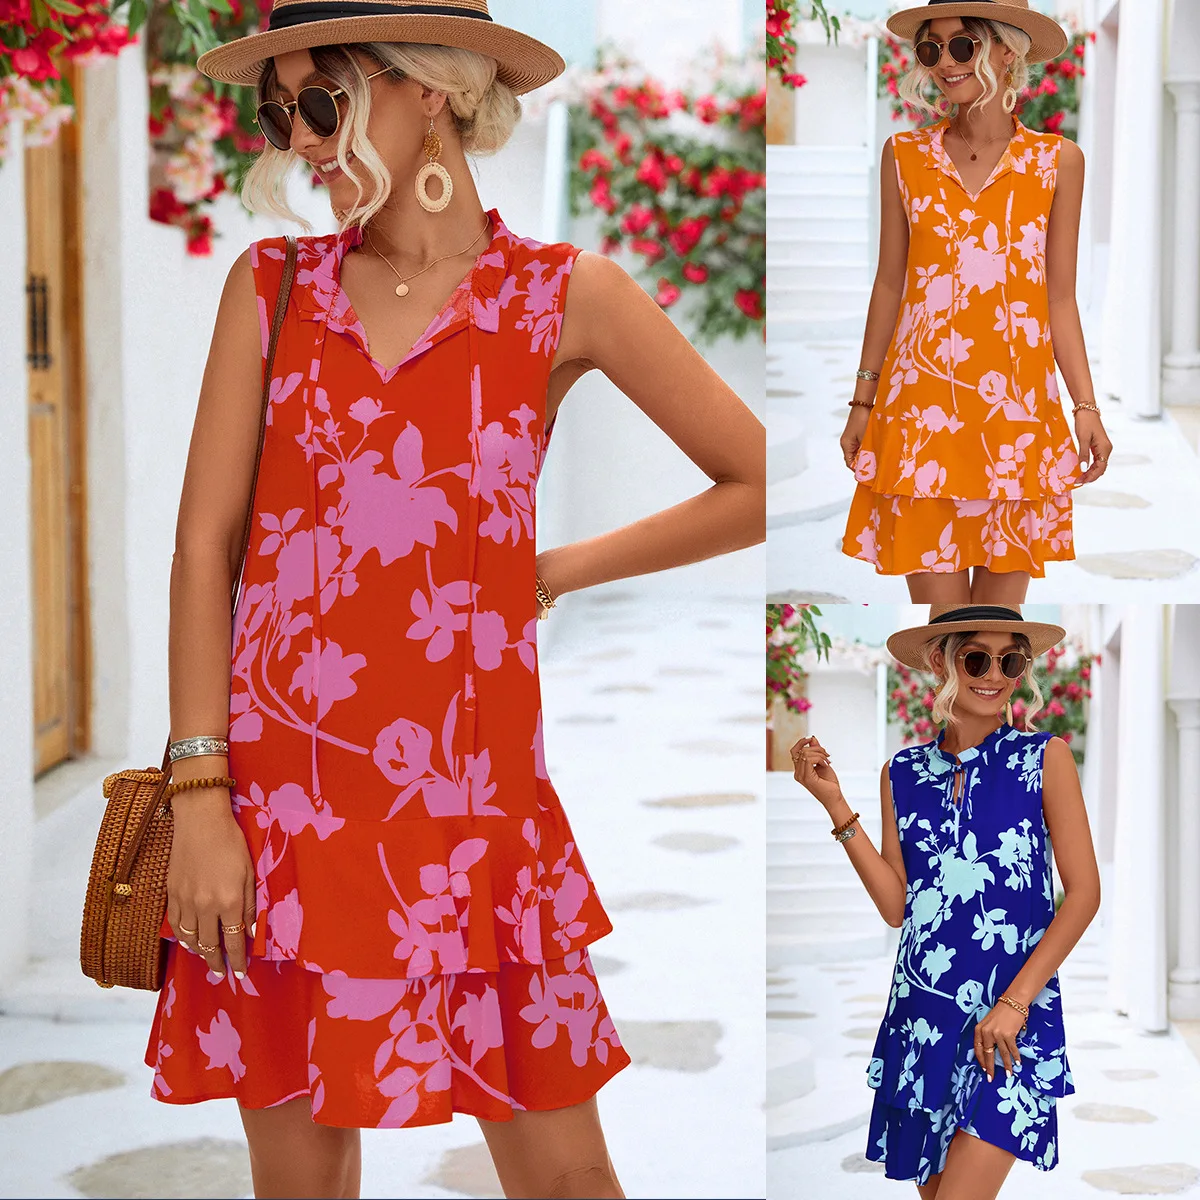 Spring/Summer 2023 New Hot Selling Women's Wear Hot selling Sleeveless Lace Ruffle Dress